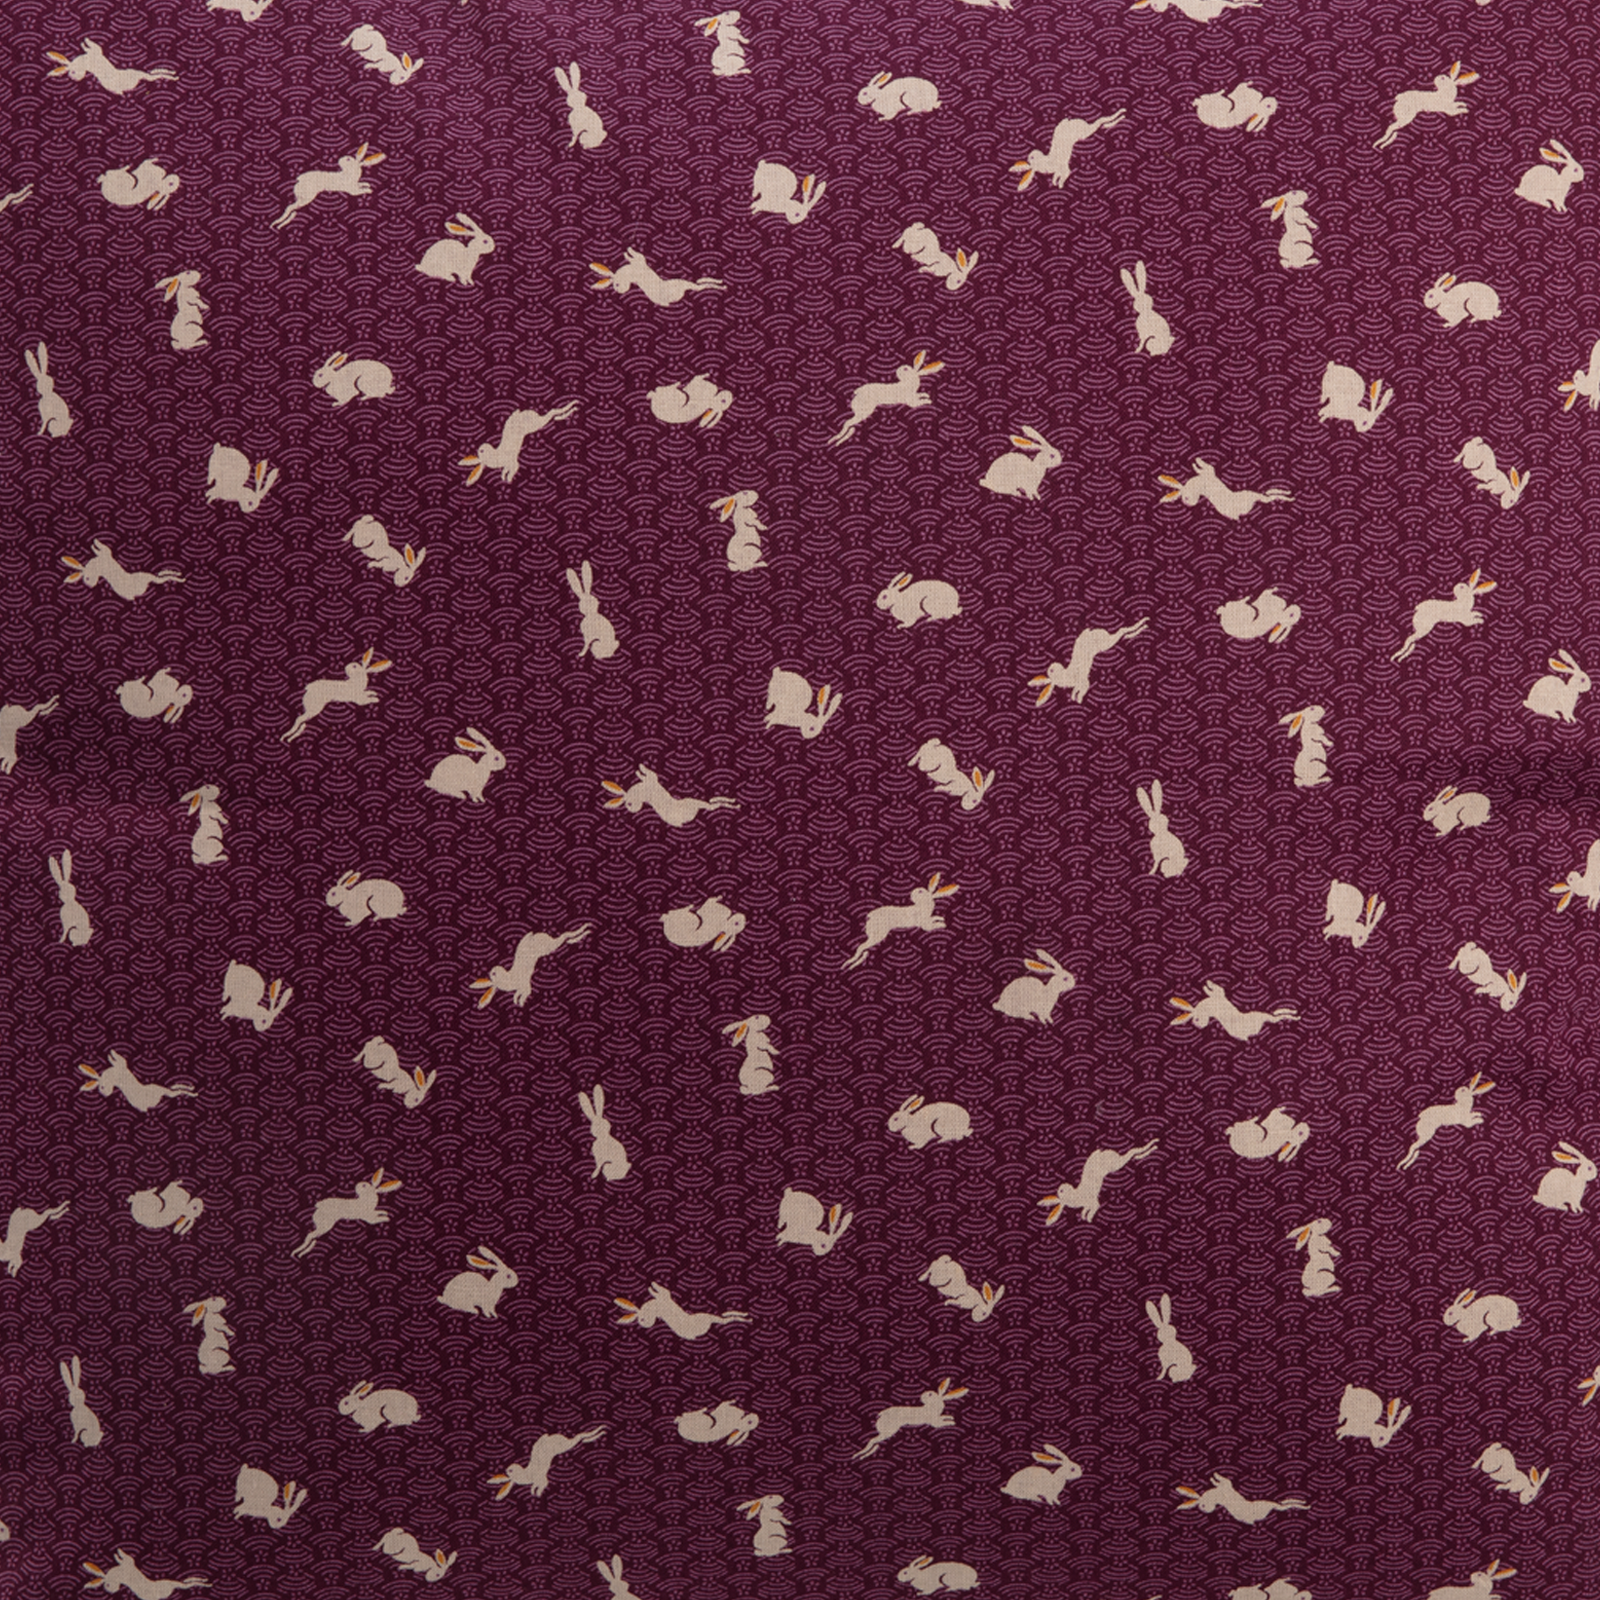 Imported Japanese Fabric - Usagi Purple_Fabric_Imported from Japan_100% Cotton_Japanese Sleep System